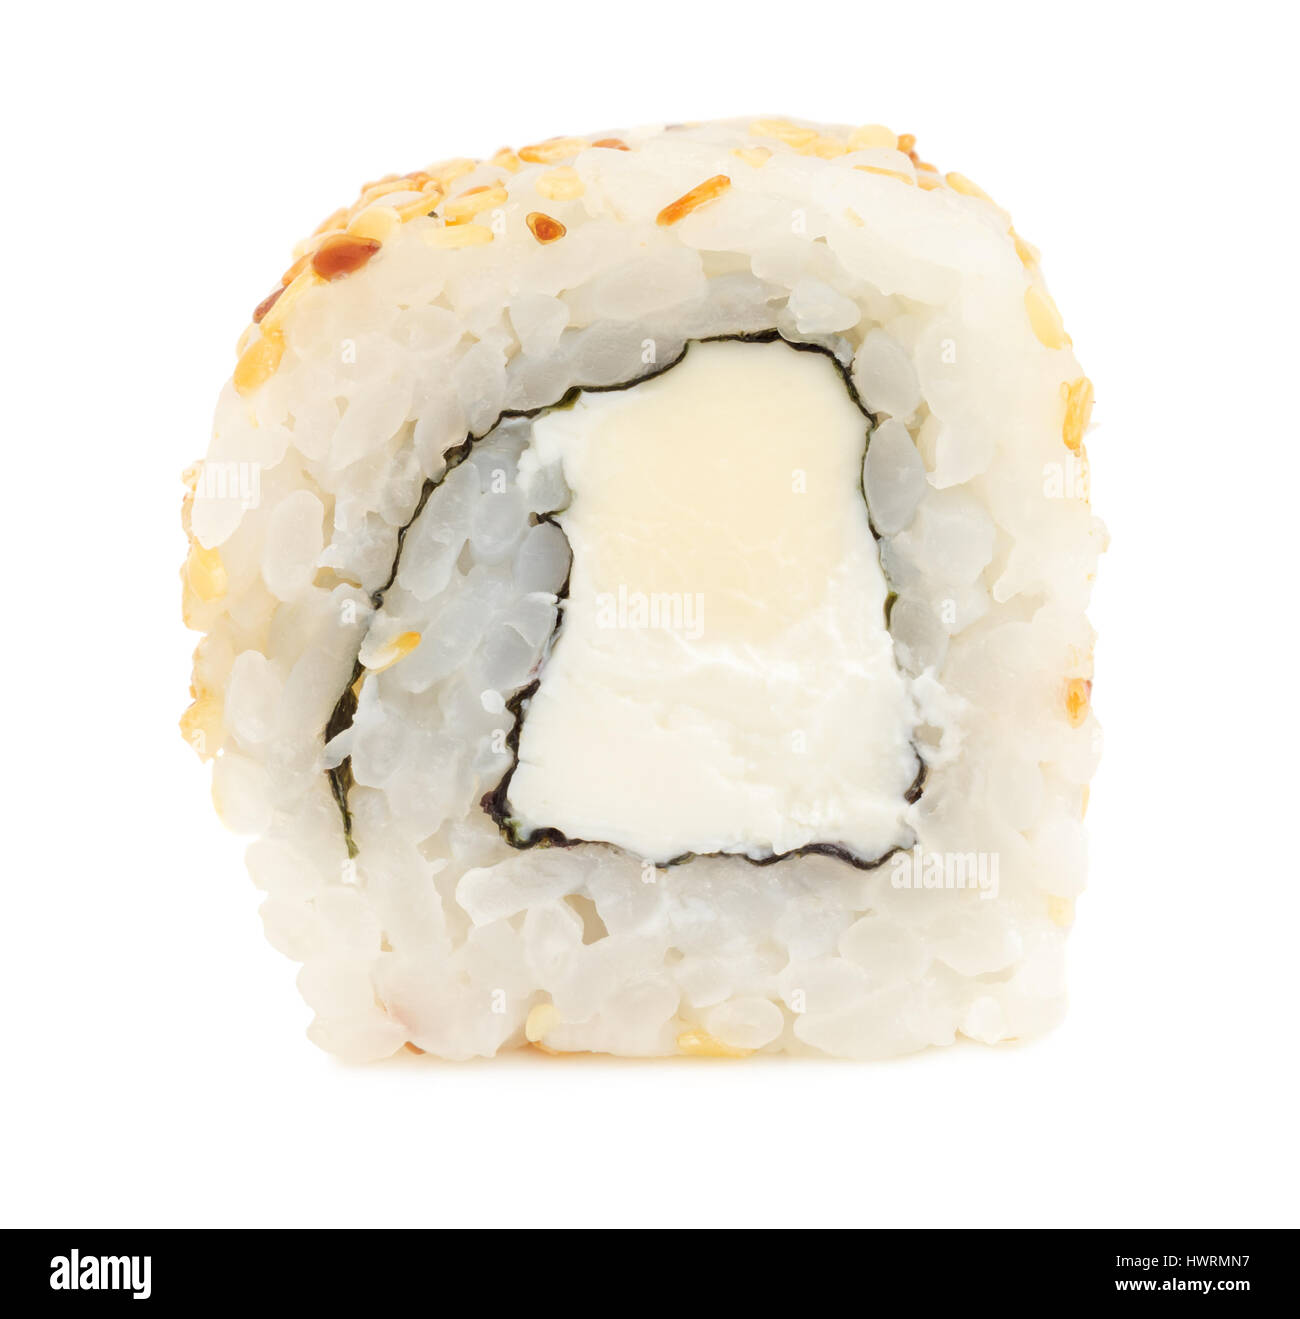 Japanese Sushi Food - Sushi Roll with Cream Cheese inside. Isolated on White Background Stock Photo